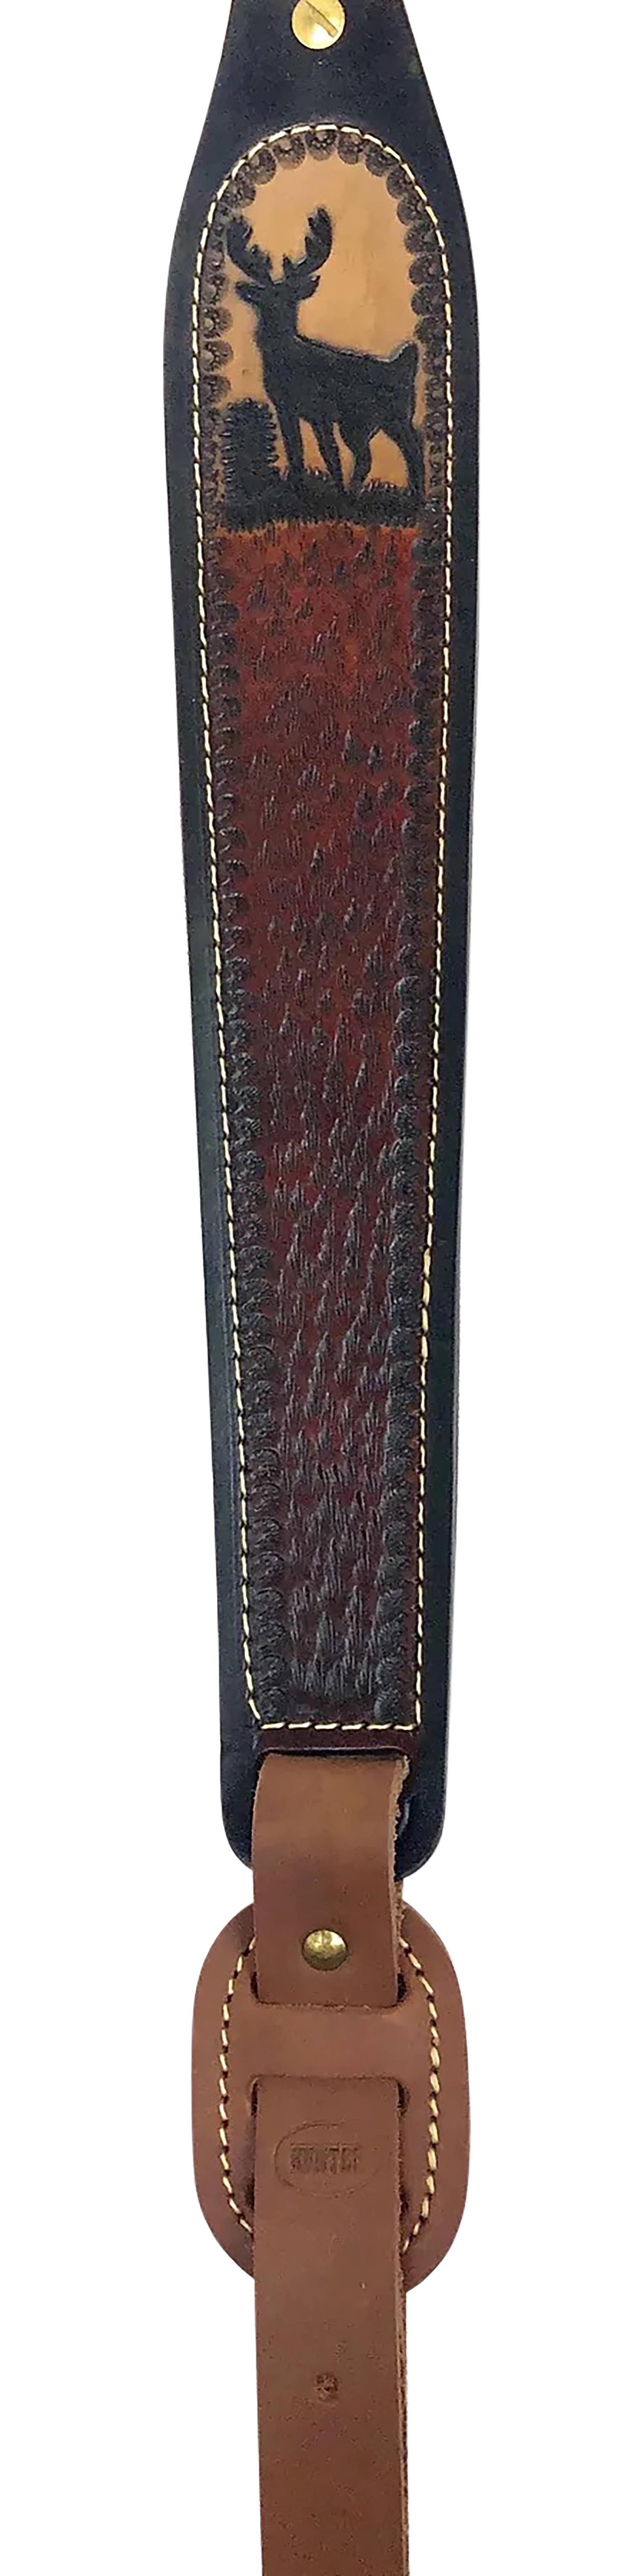 Hunter Company 103 Cobra  Leather/Suede with Deer Design, Quick Adjust